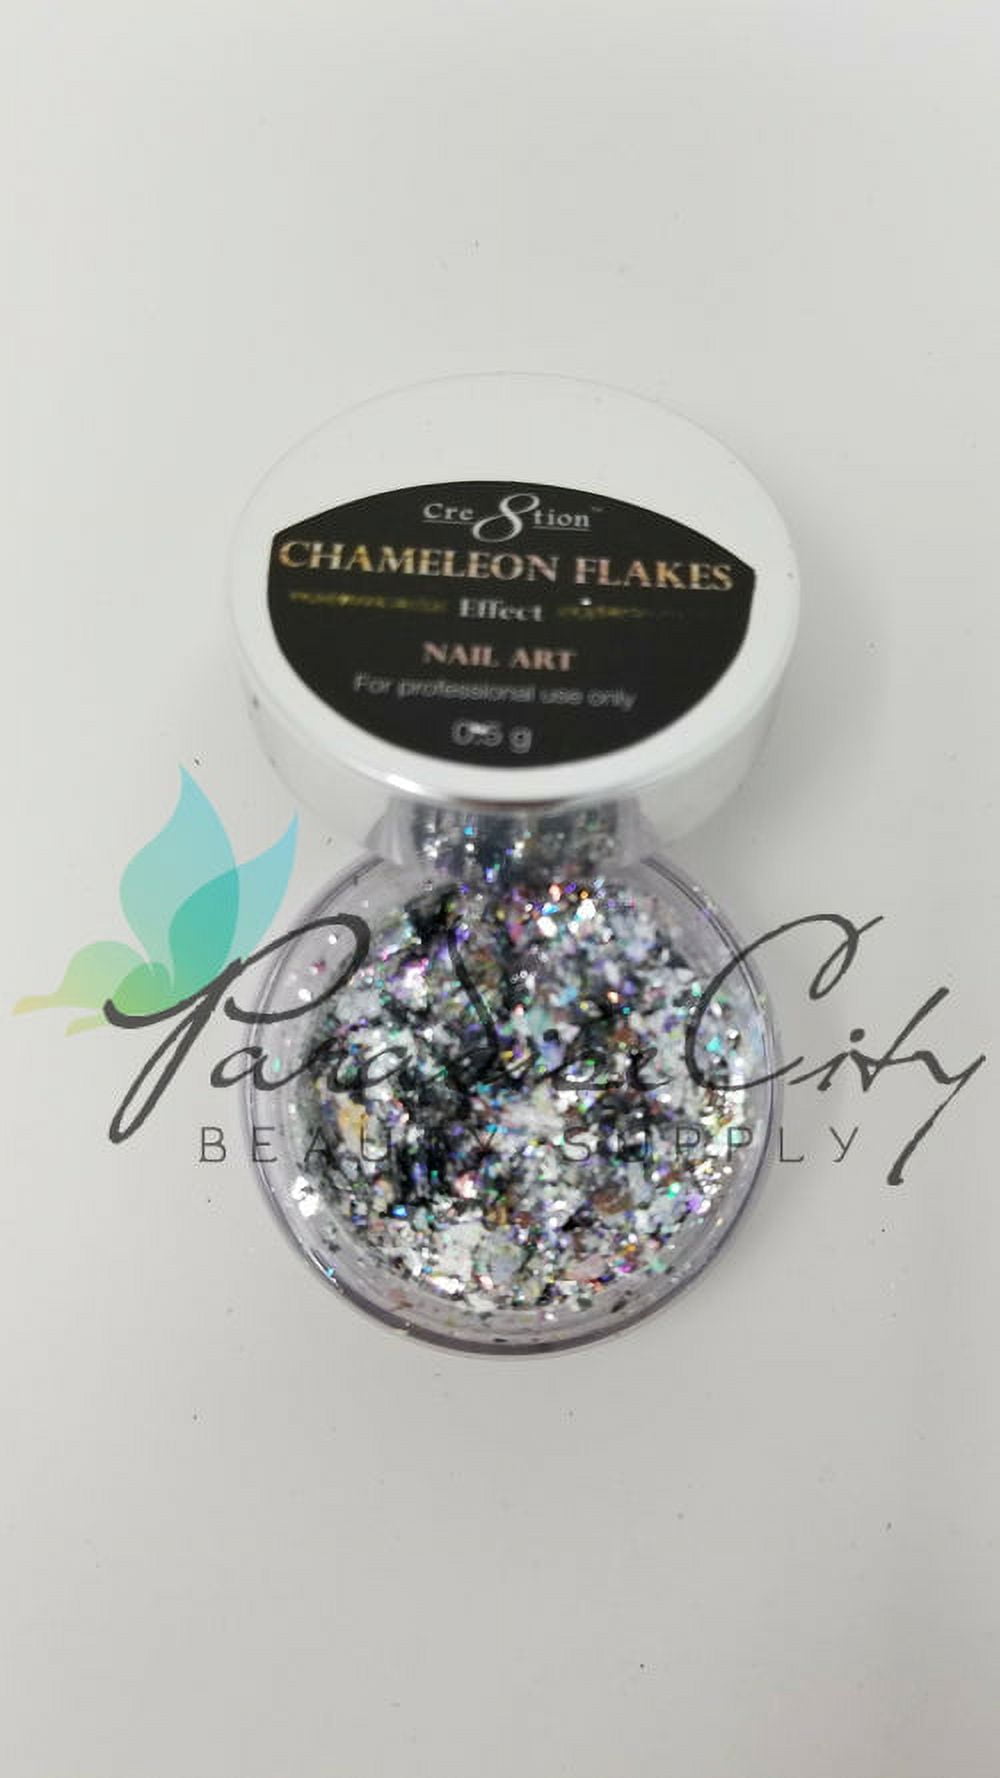 Cre8tion - Chameleon Flakes Nail Art .5g C-13